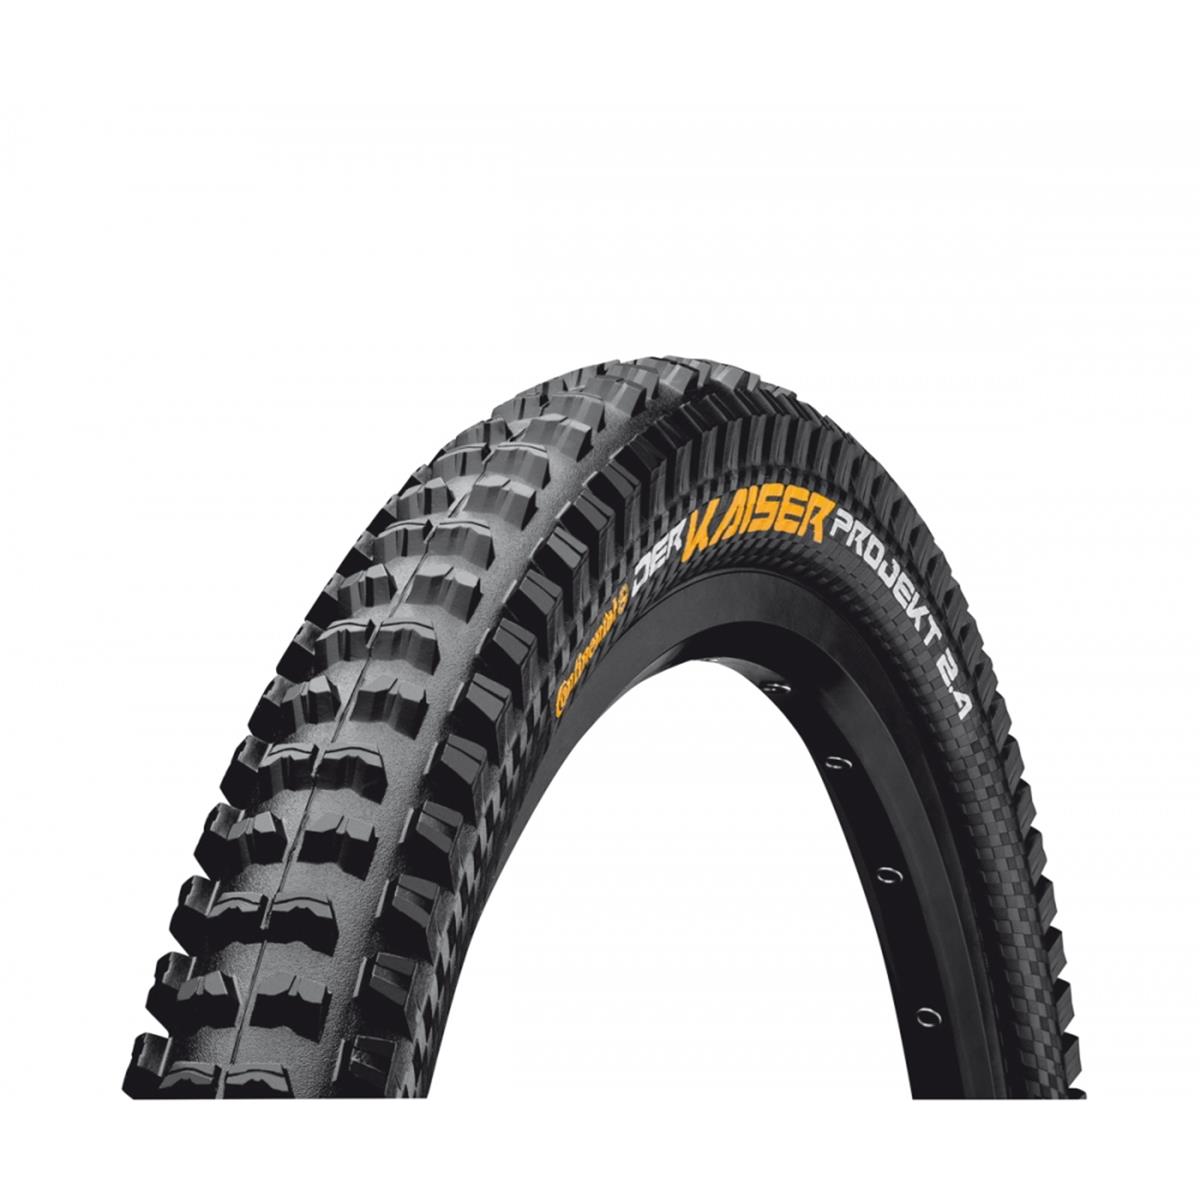 Continental MTB Tire Der Kaiser Projekt 2.4 ProTection Apex Premium 27,5 x 2.40 Inches, Black Chili, Foldable